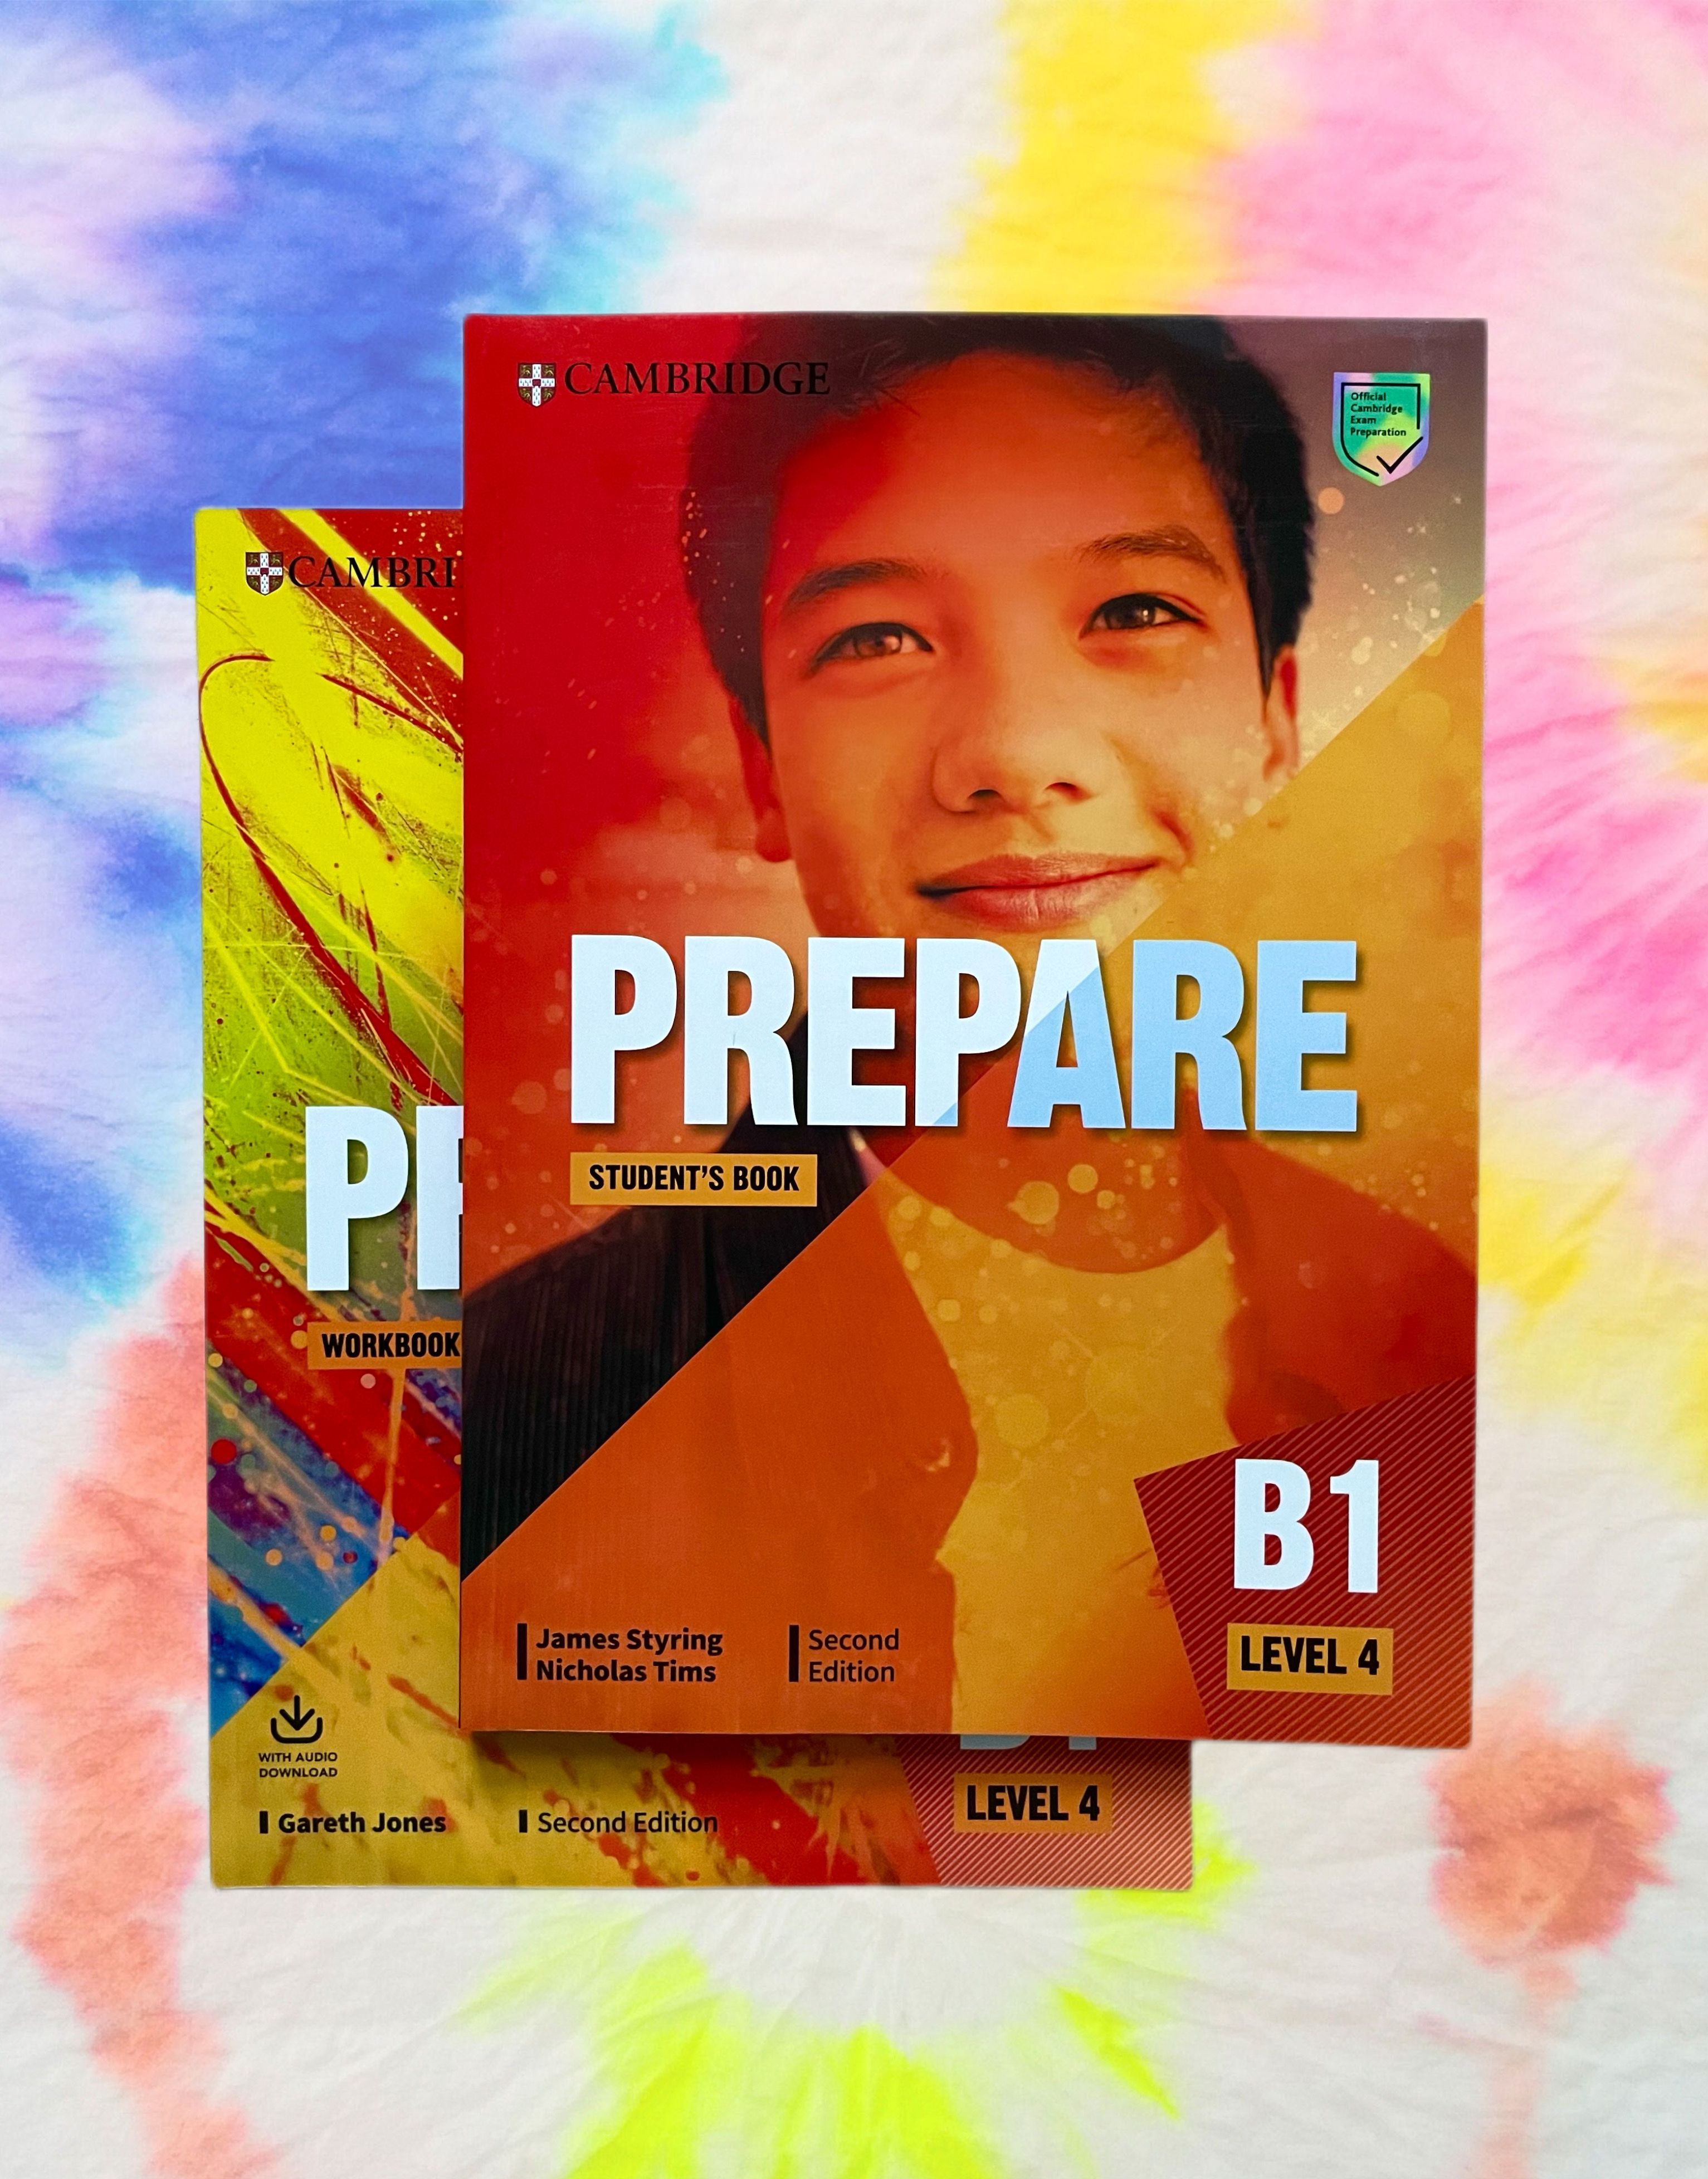 Учебник prepare. Prepare учебник. Prepare учебник английского. Учебник prepare 4. Prepare Level 4 student's book.